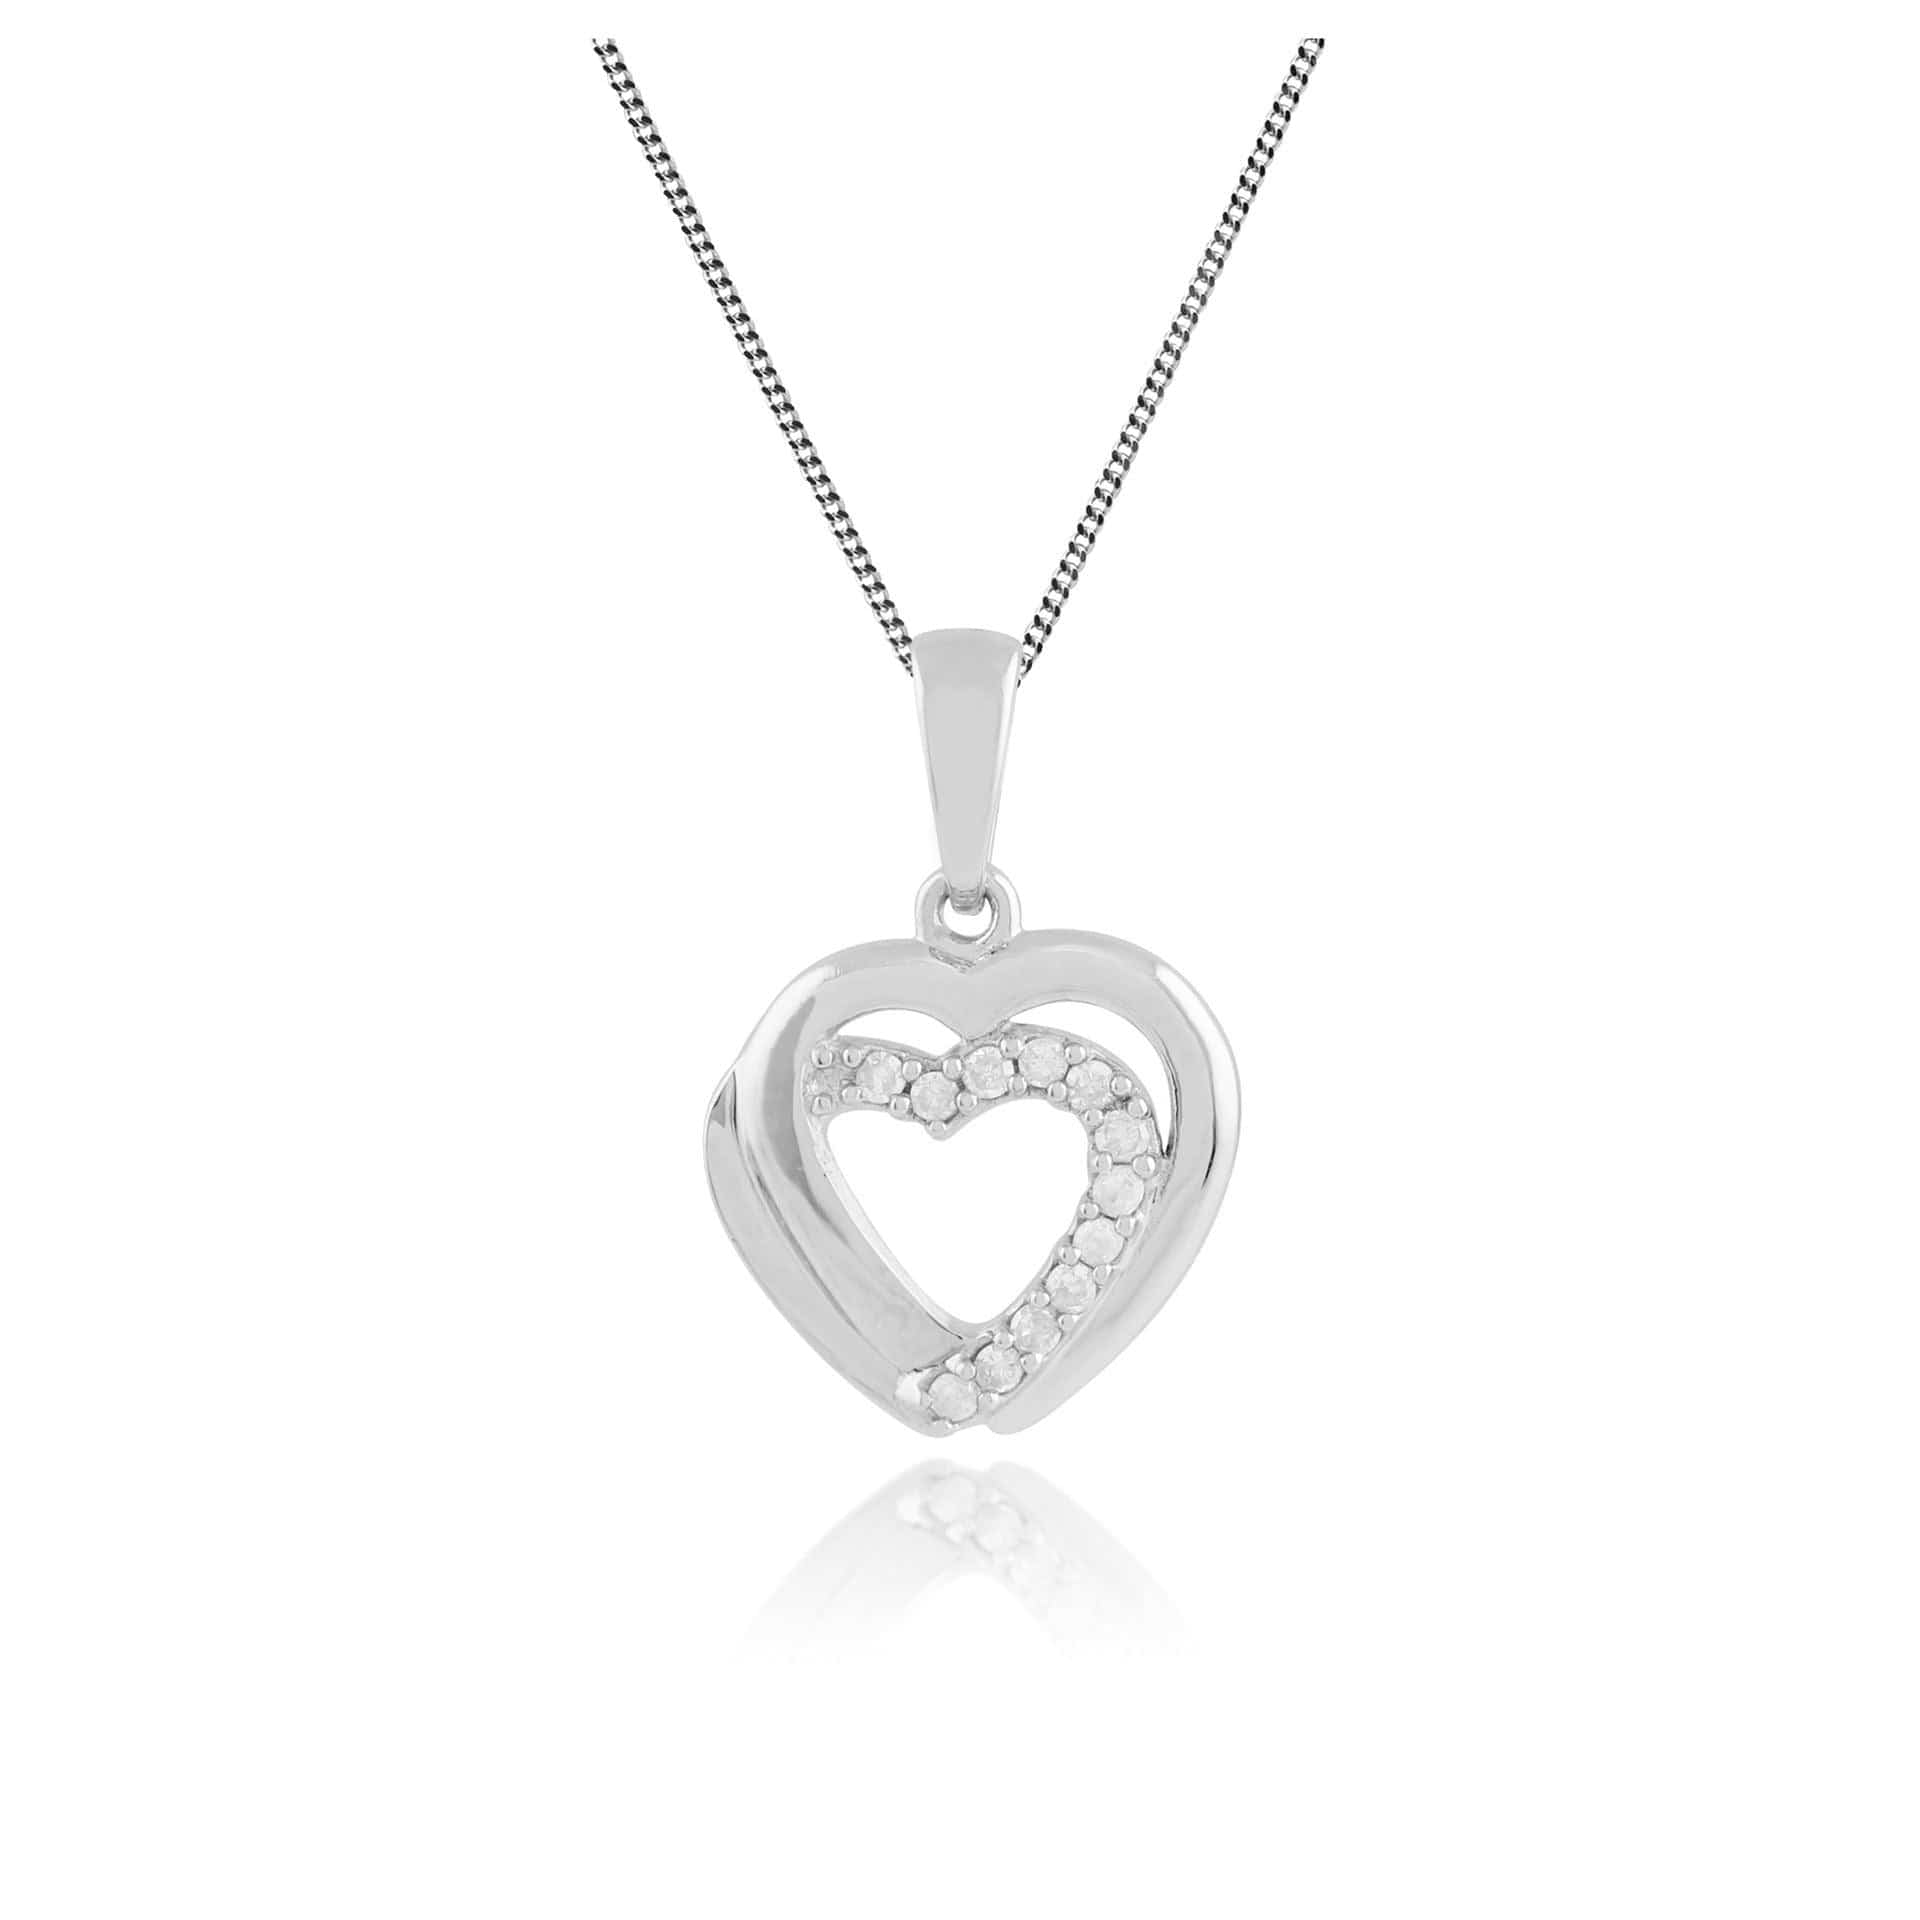 Photos - Pendant / Choker Necklace Classic Round Diamond Heart Pendant in 9ct White Gold